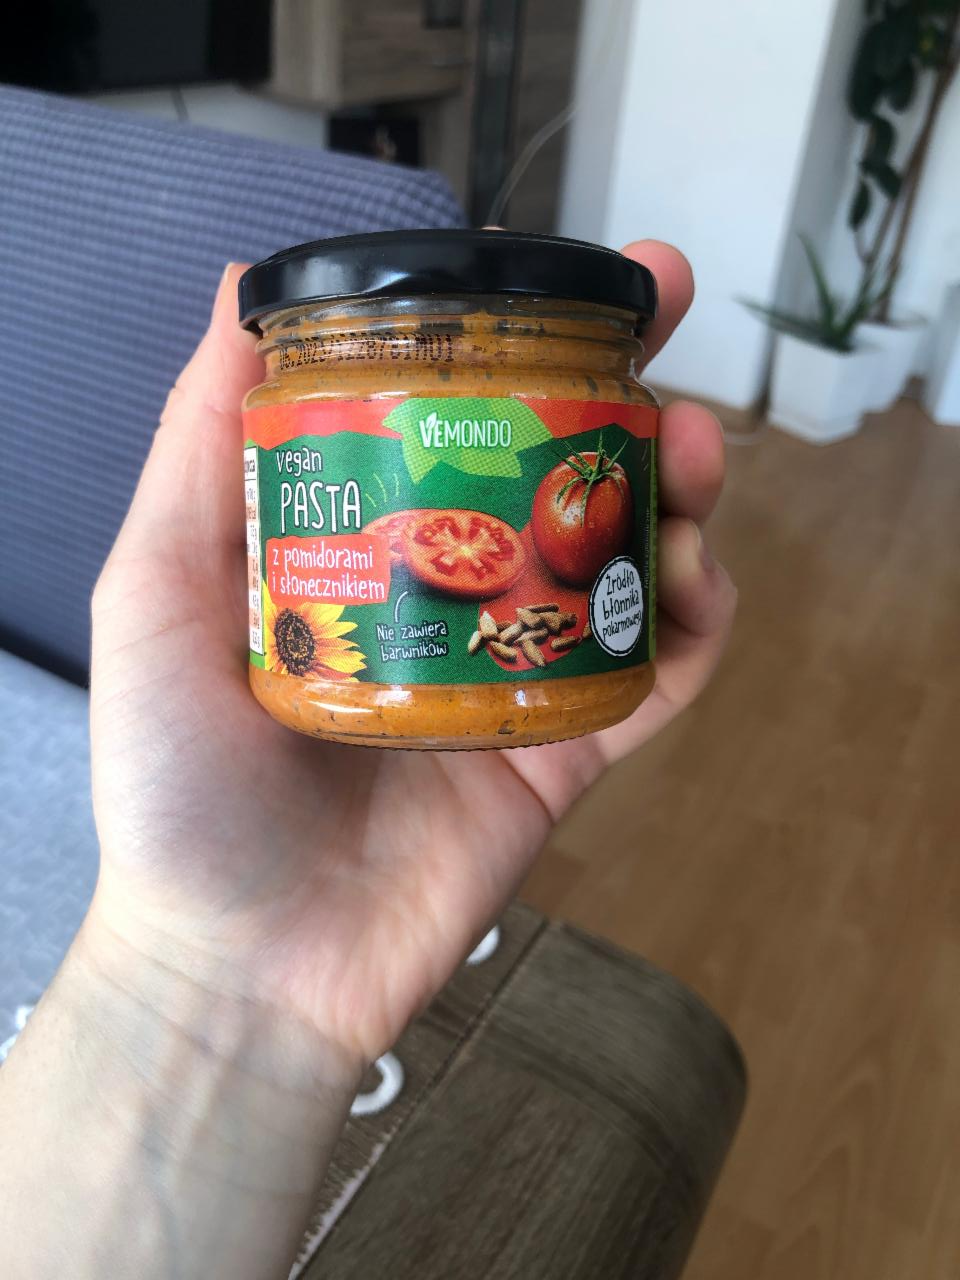 Fotografie - Vegan pasta z pomidorami i slonecznikiem